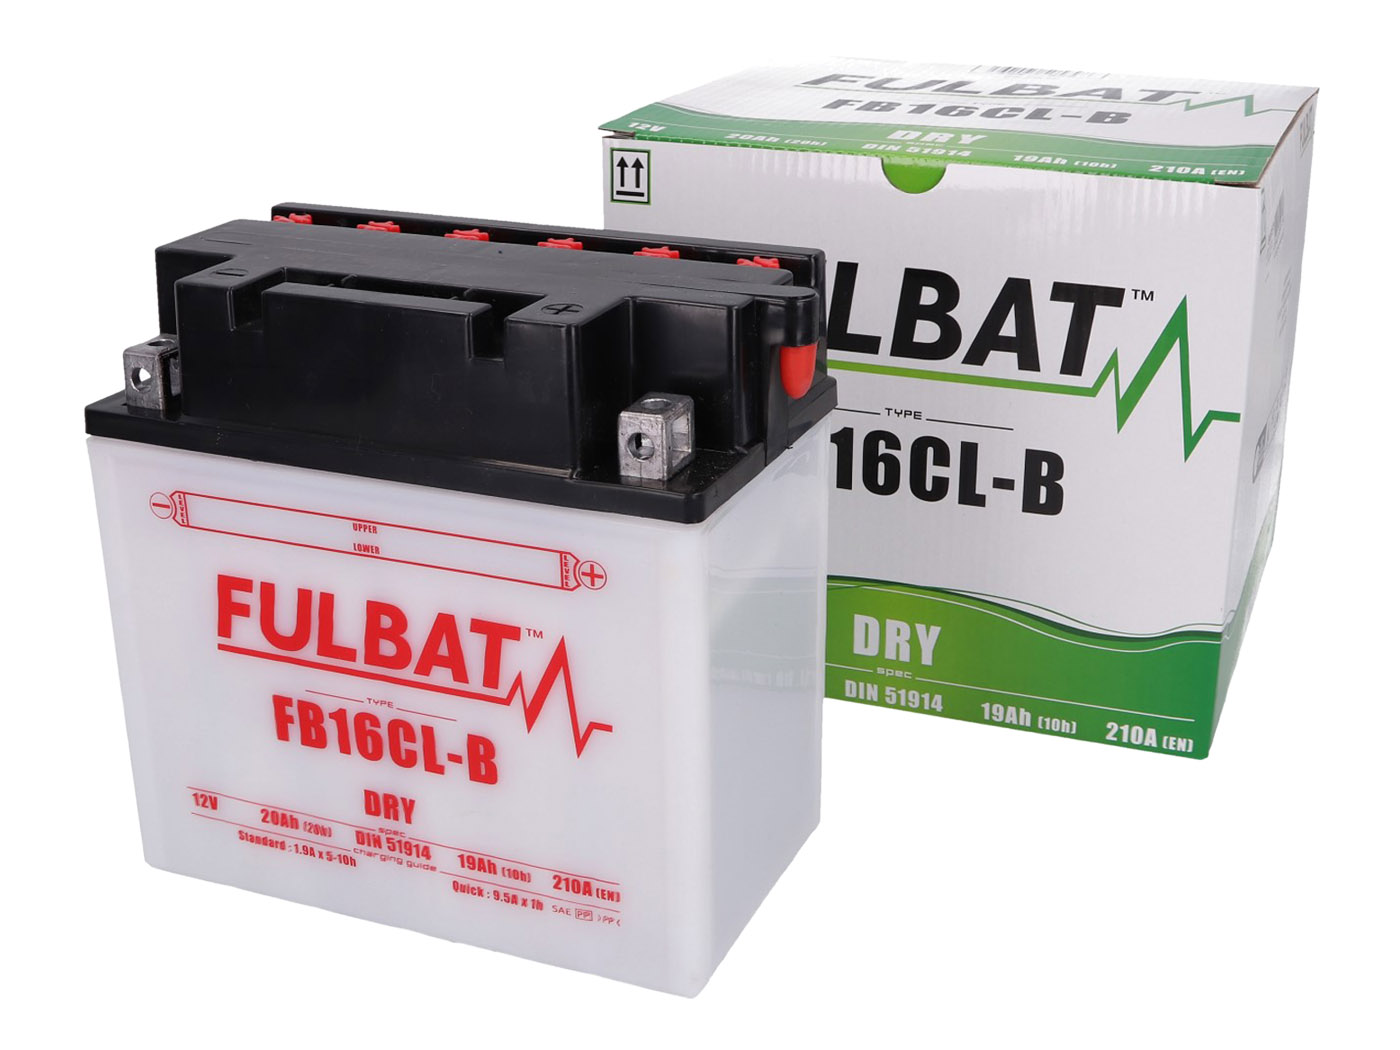 Fulbat FB16CL-B Batterie